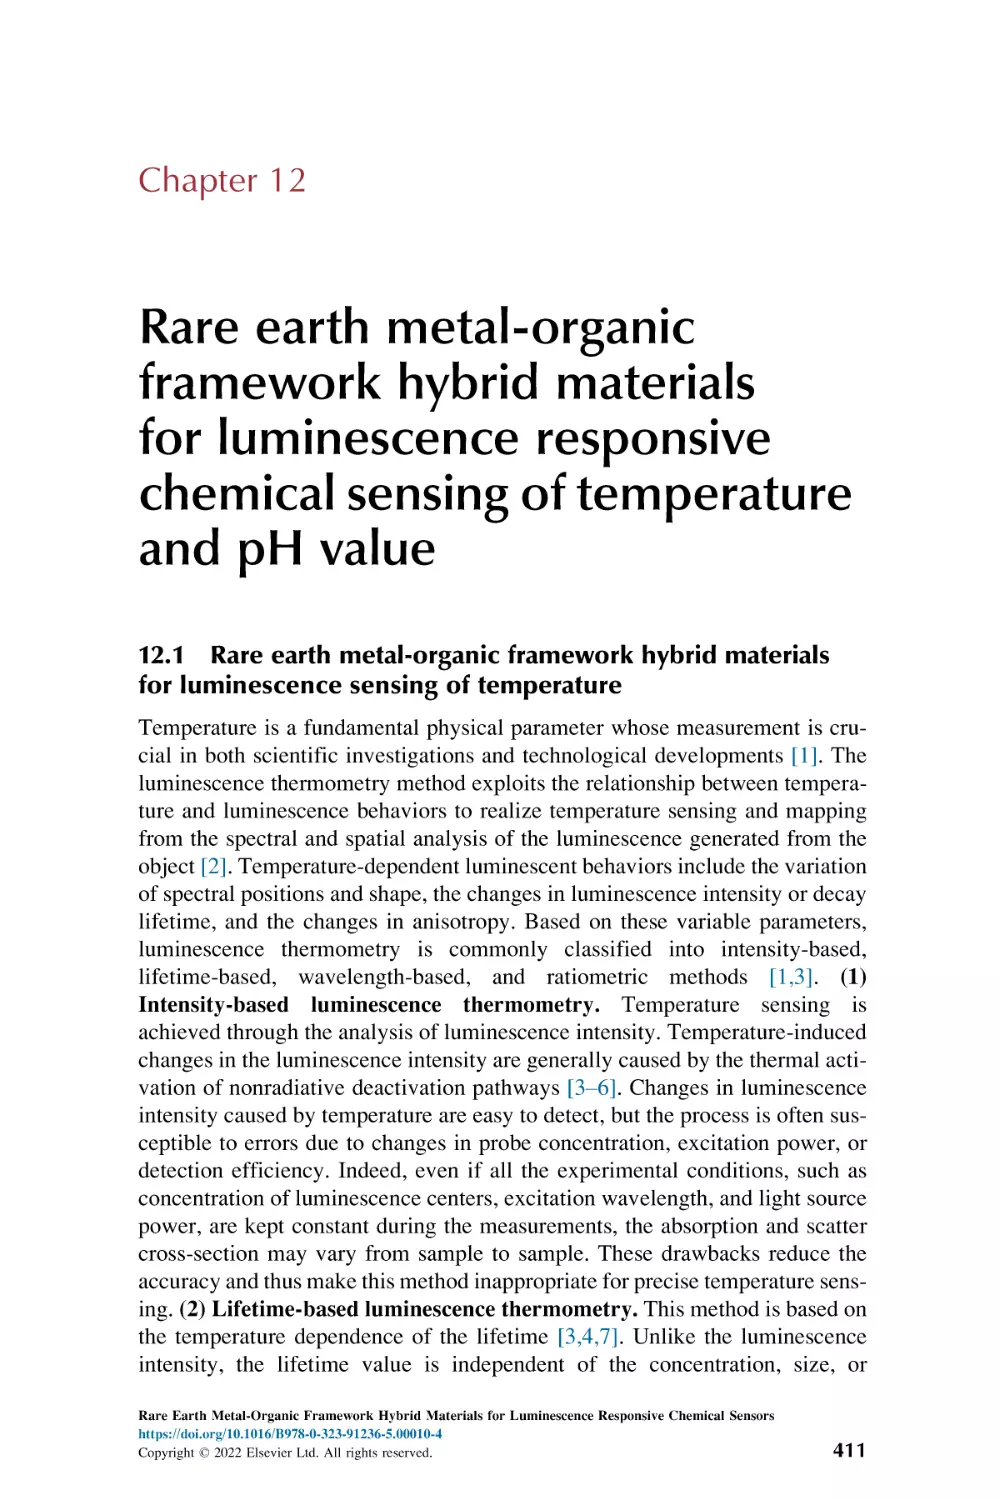 Chapter 12
12.1. Rare earth metal-organic framework hybrid materials for luminescence sensing of temperature